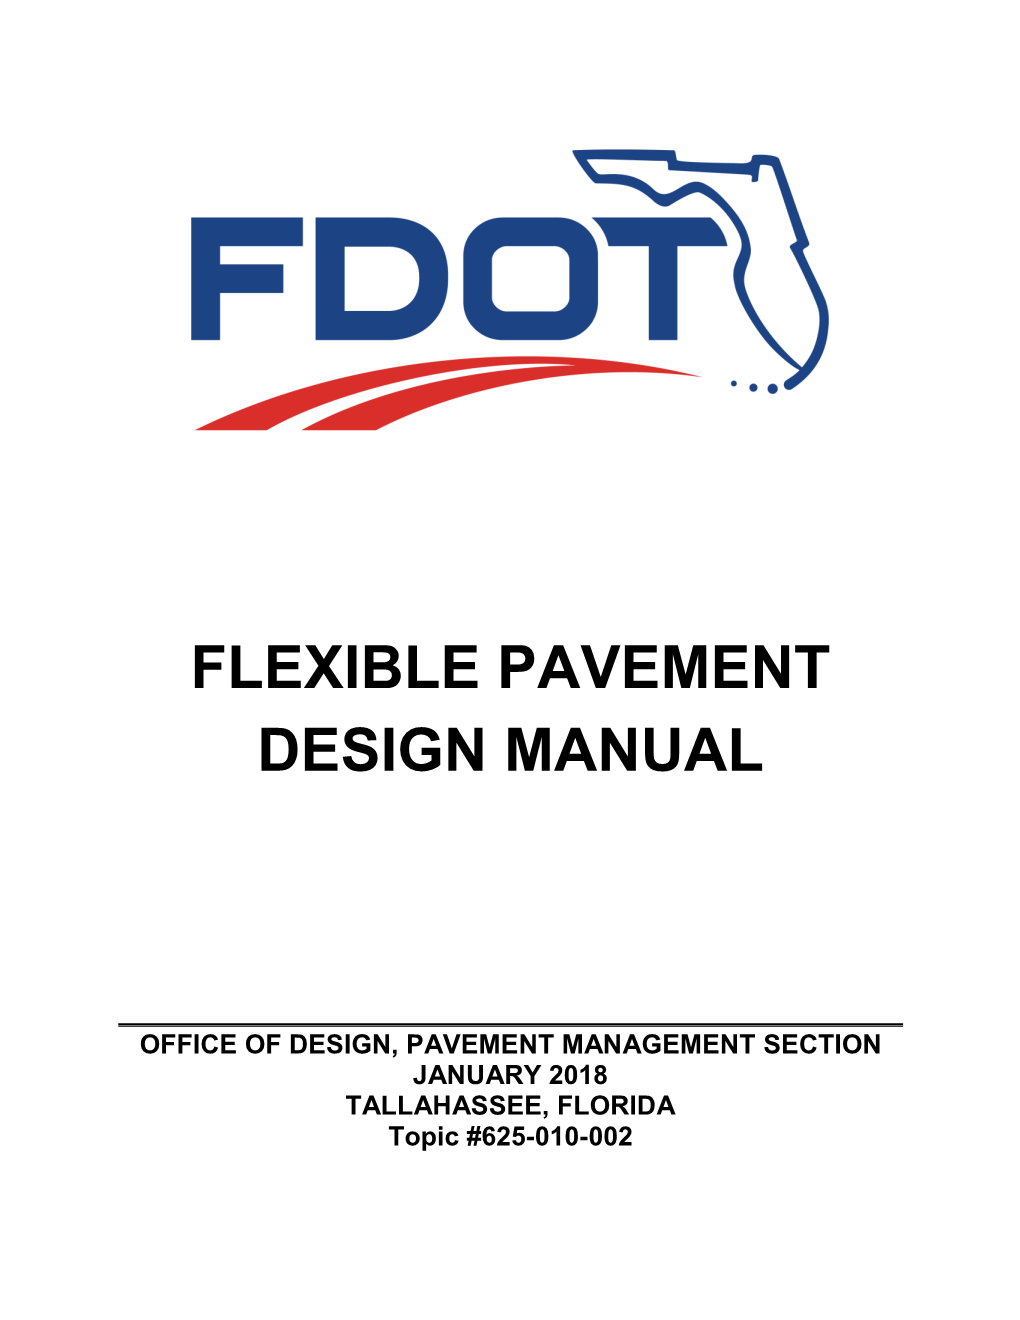 Flexible Pavement Design Manual